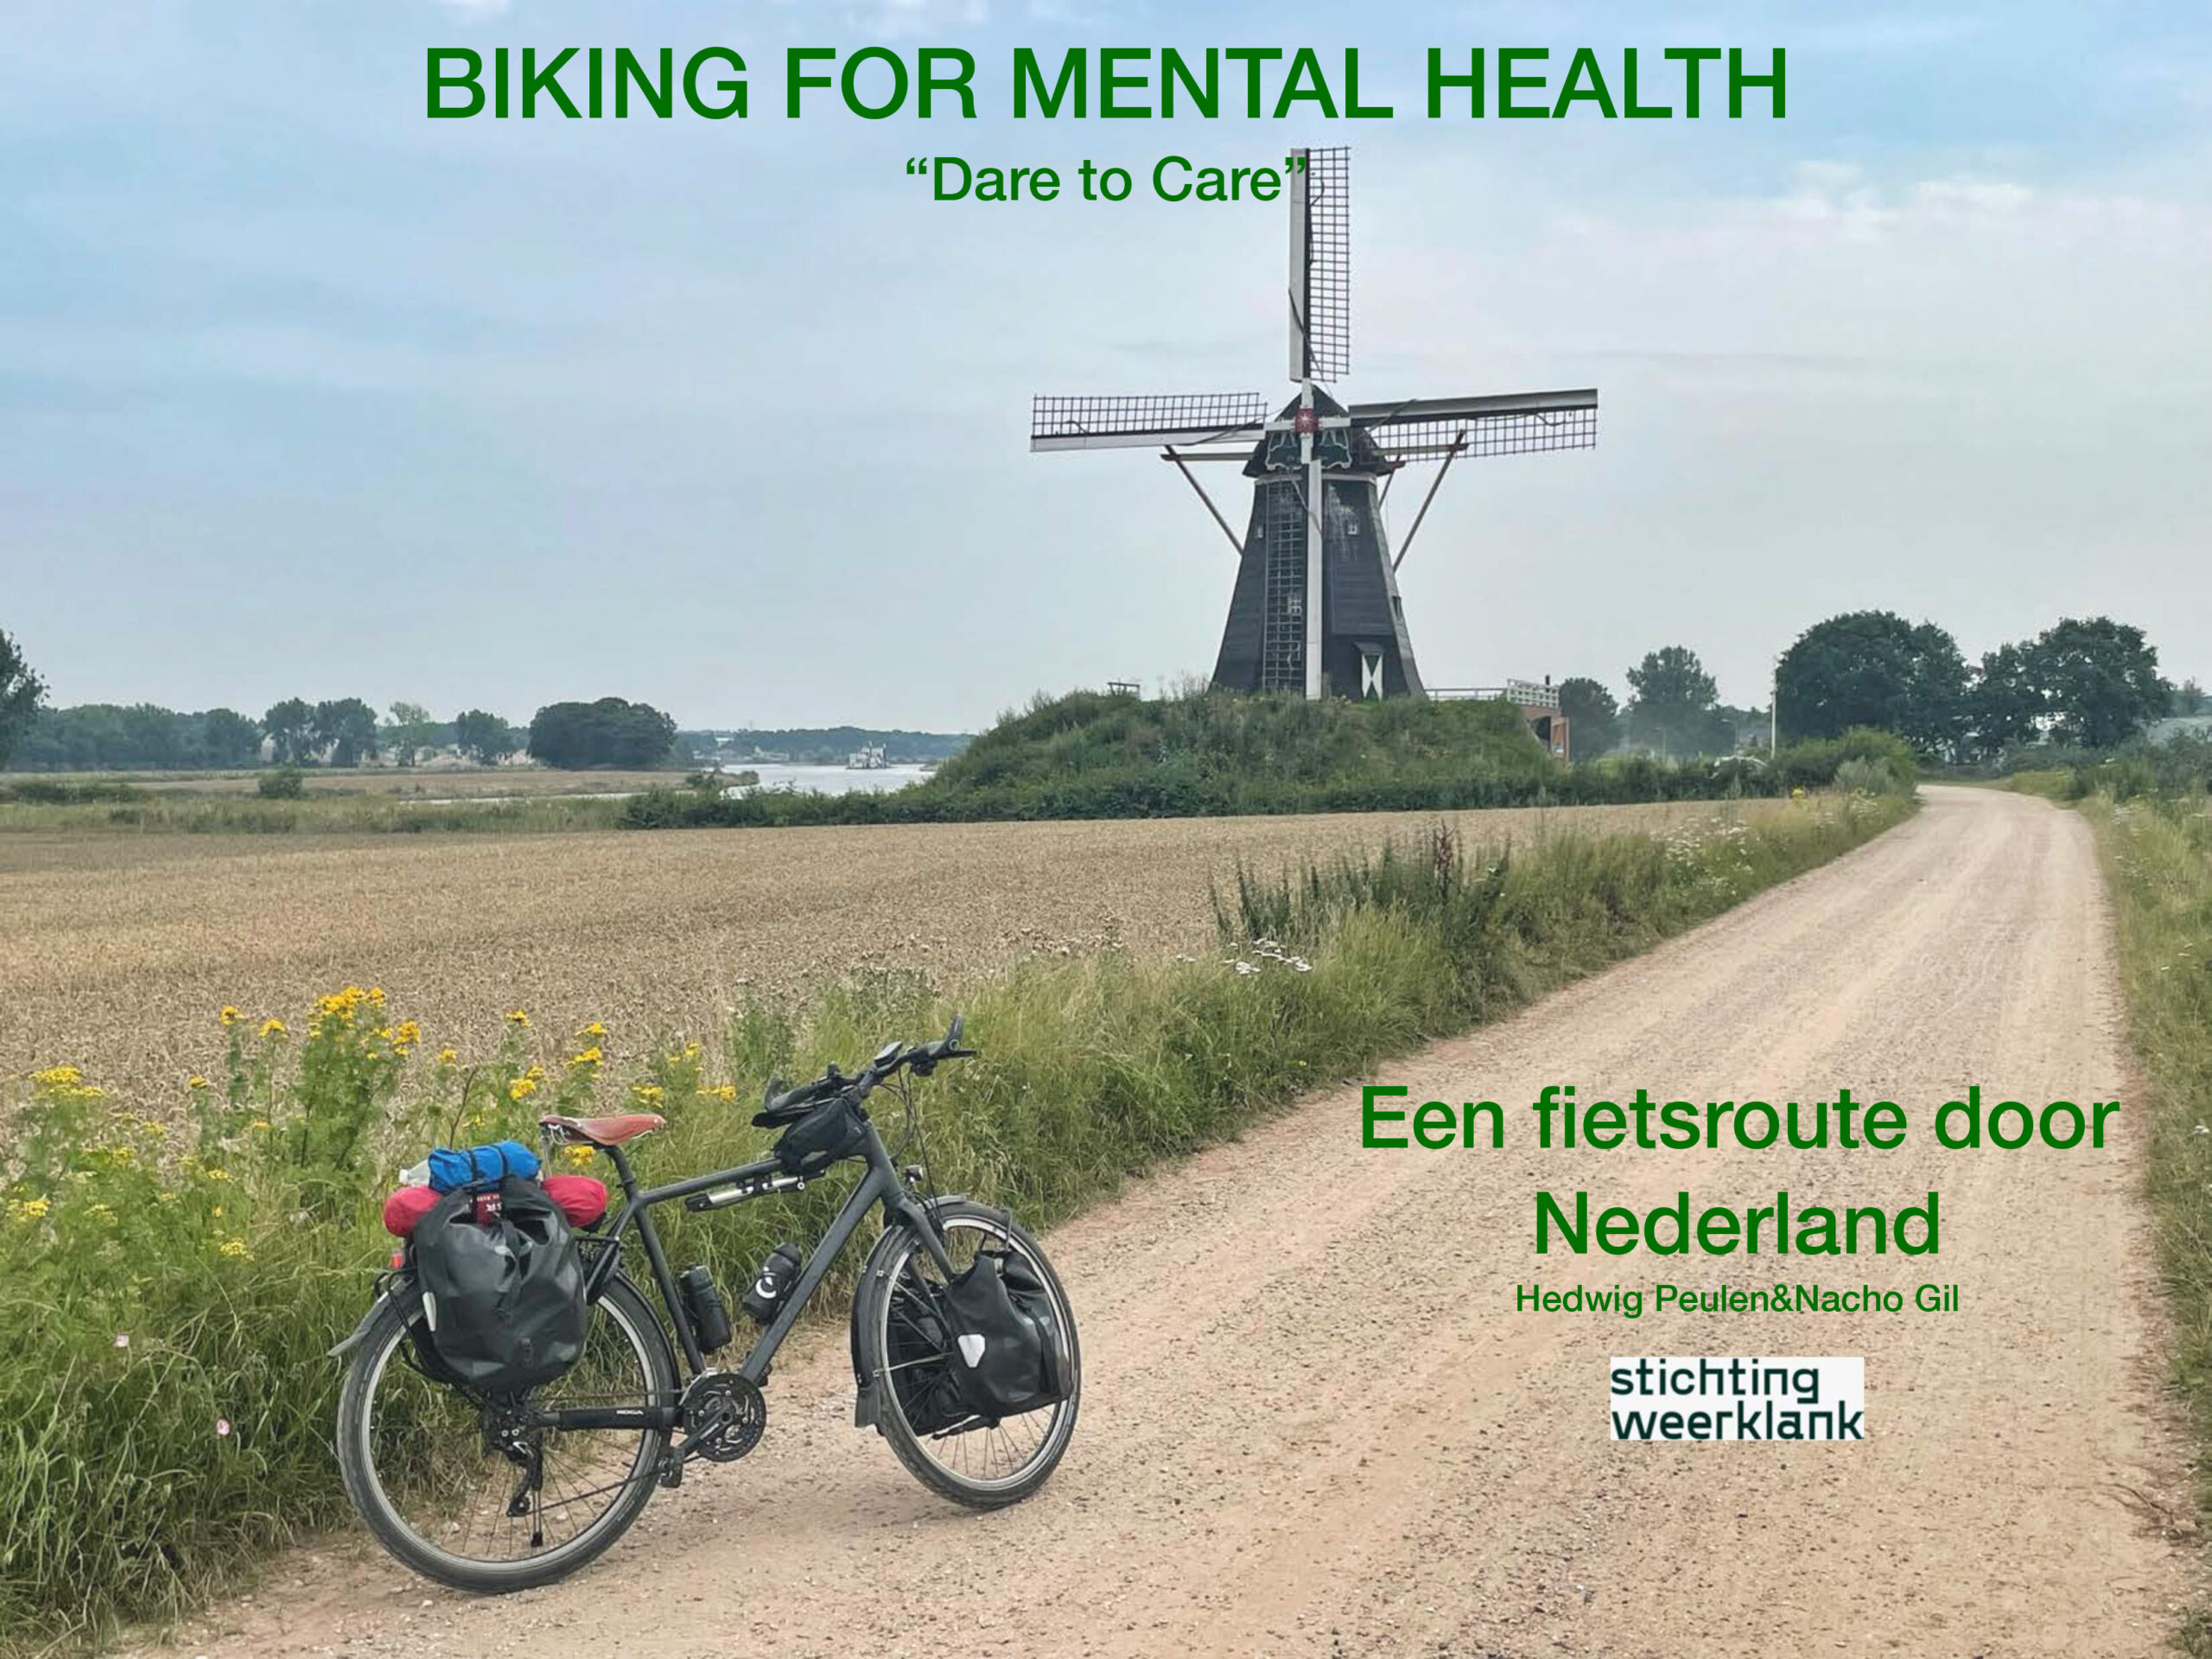 Biking for mental health